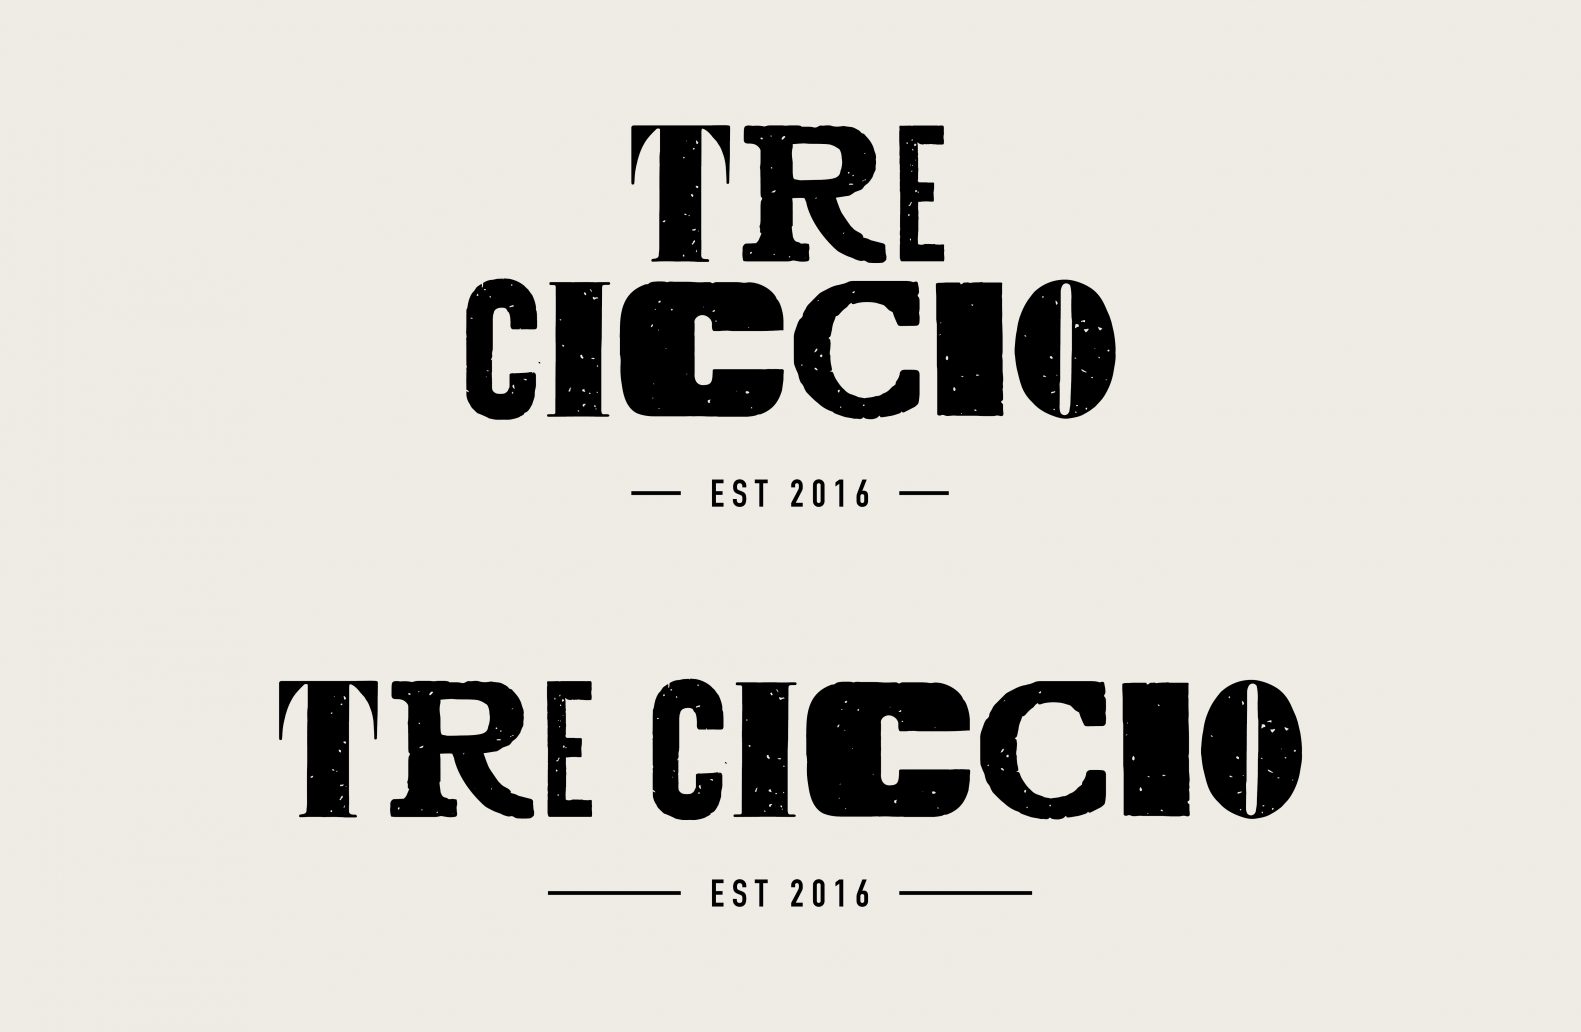 Tre Ciccio Logos Designed by Phaus